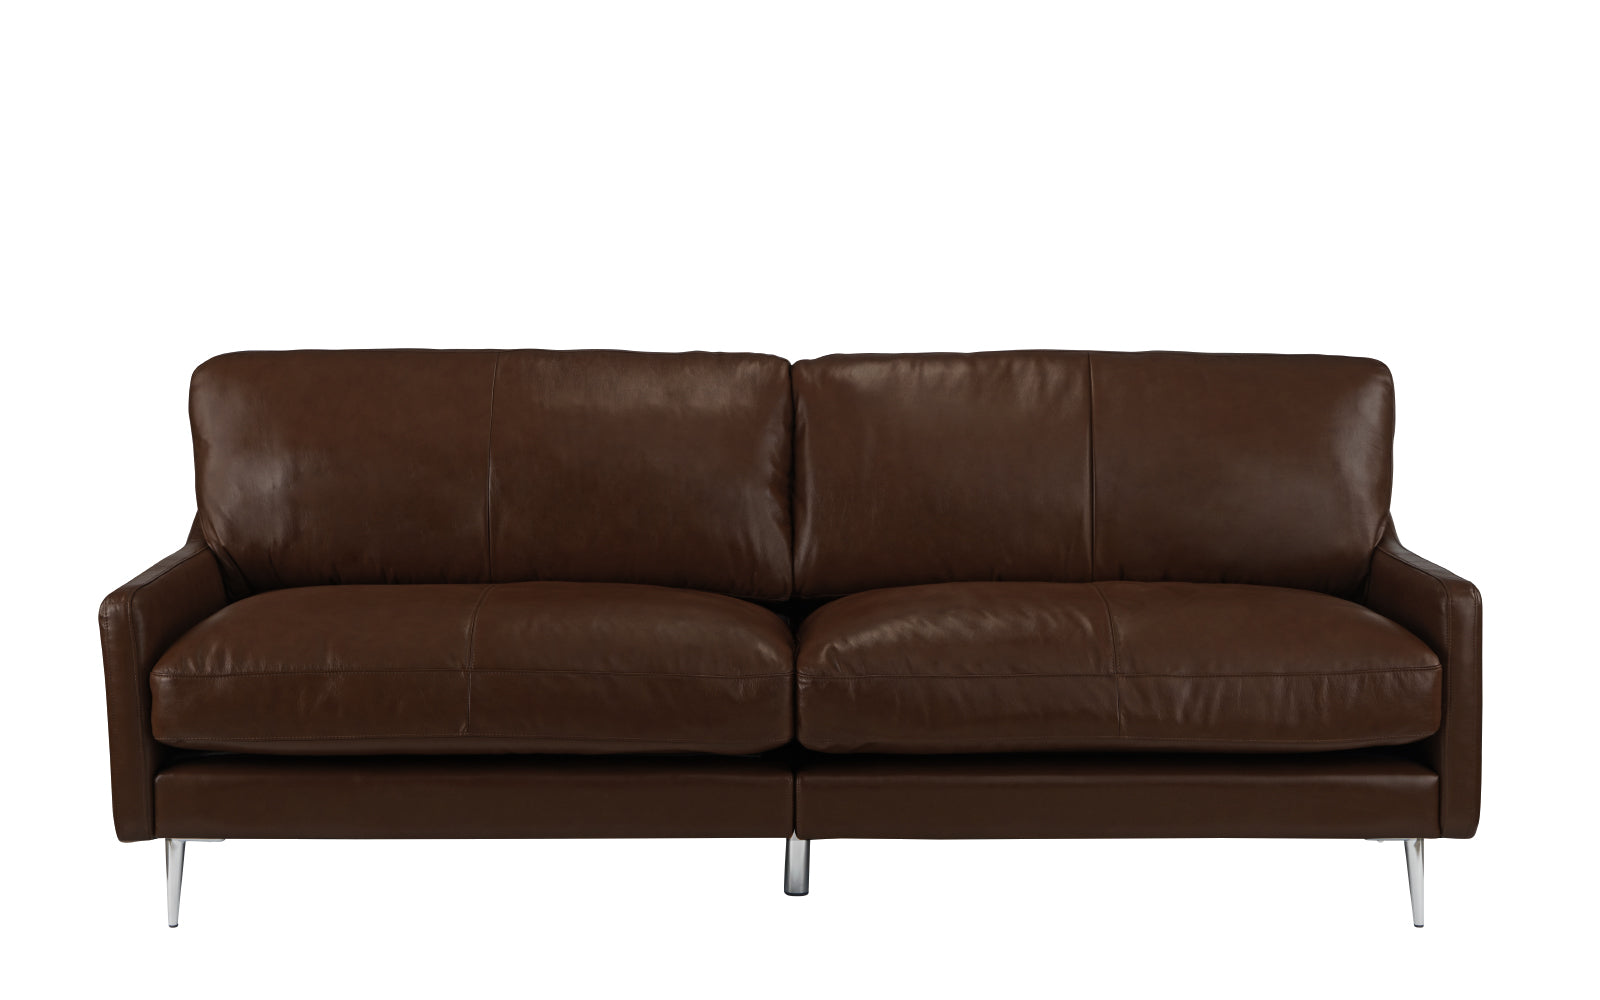 Aerin Mid Century Leather Match Sofa